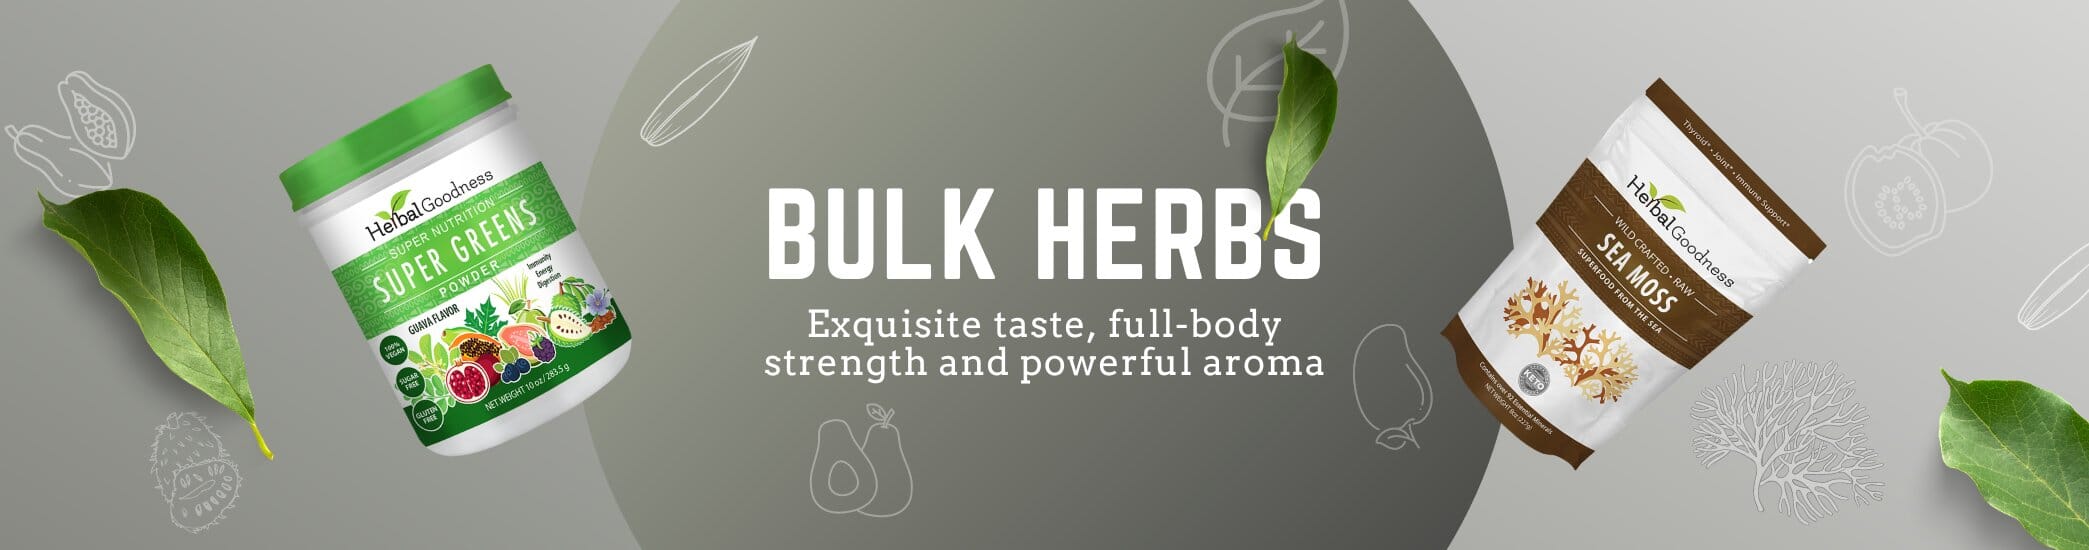 Bulk Herbs & Super Greens